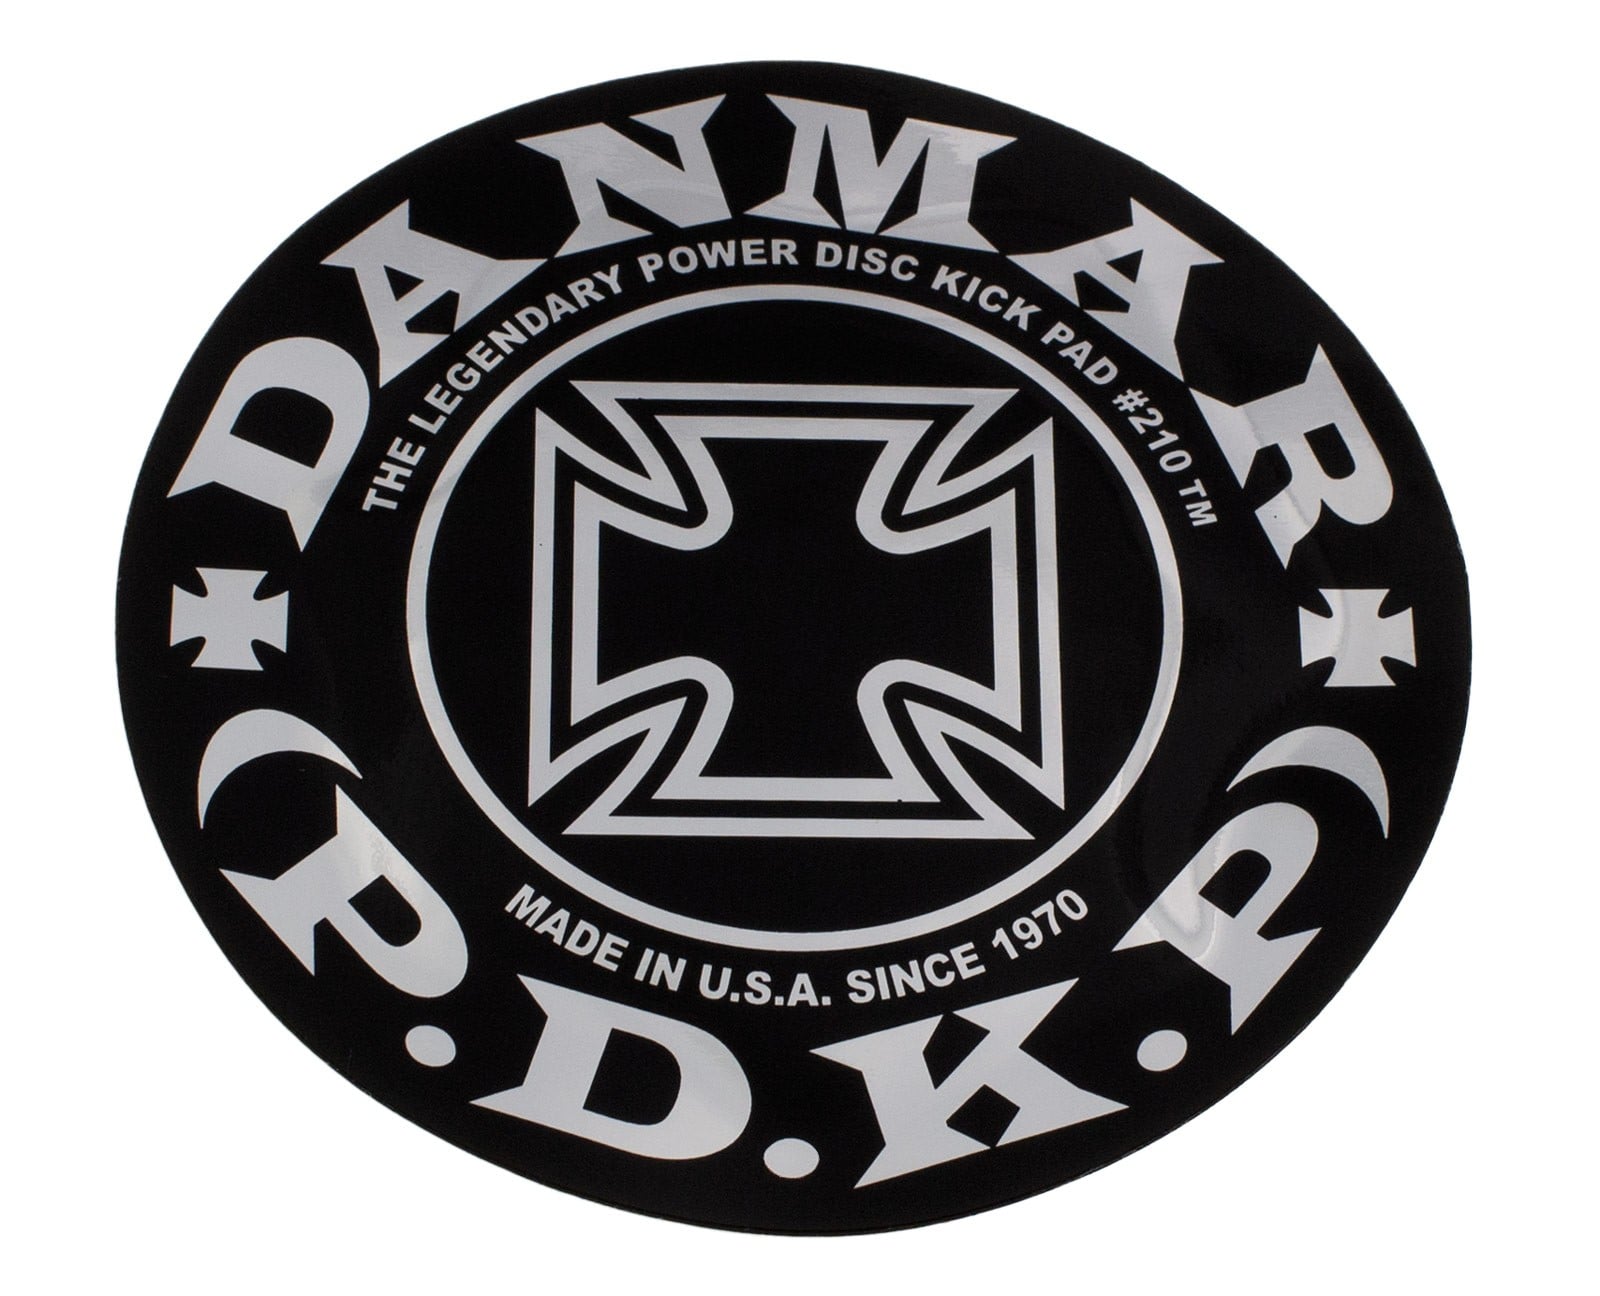 DANMAR 210IC - BD POWER DISK KICK PAD - IRON CROSS